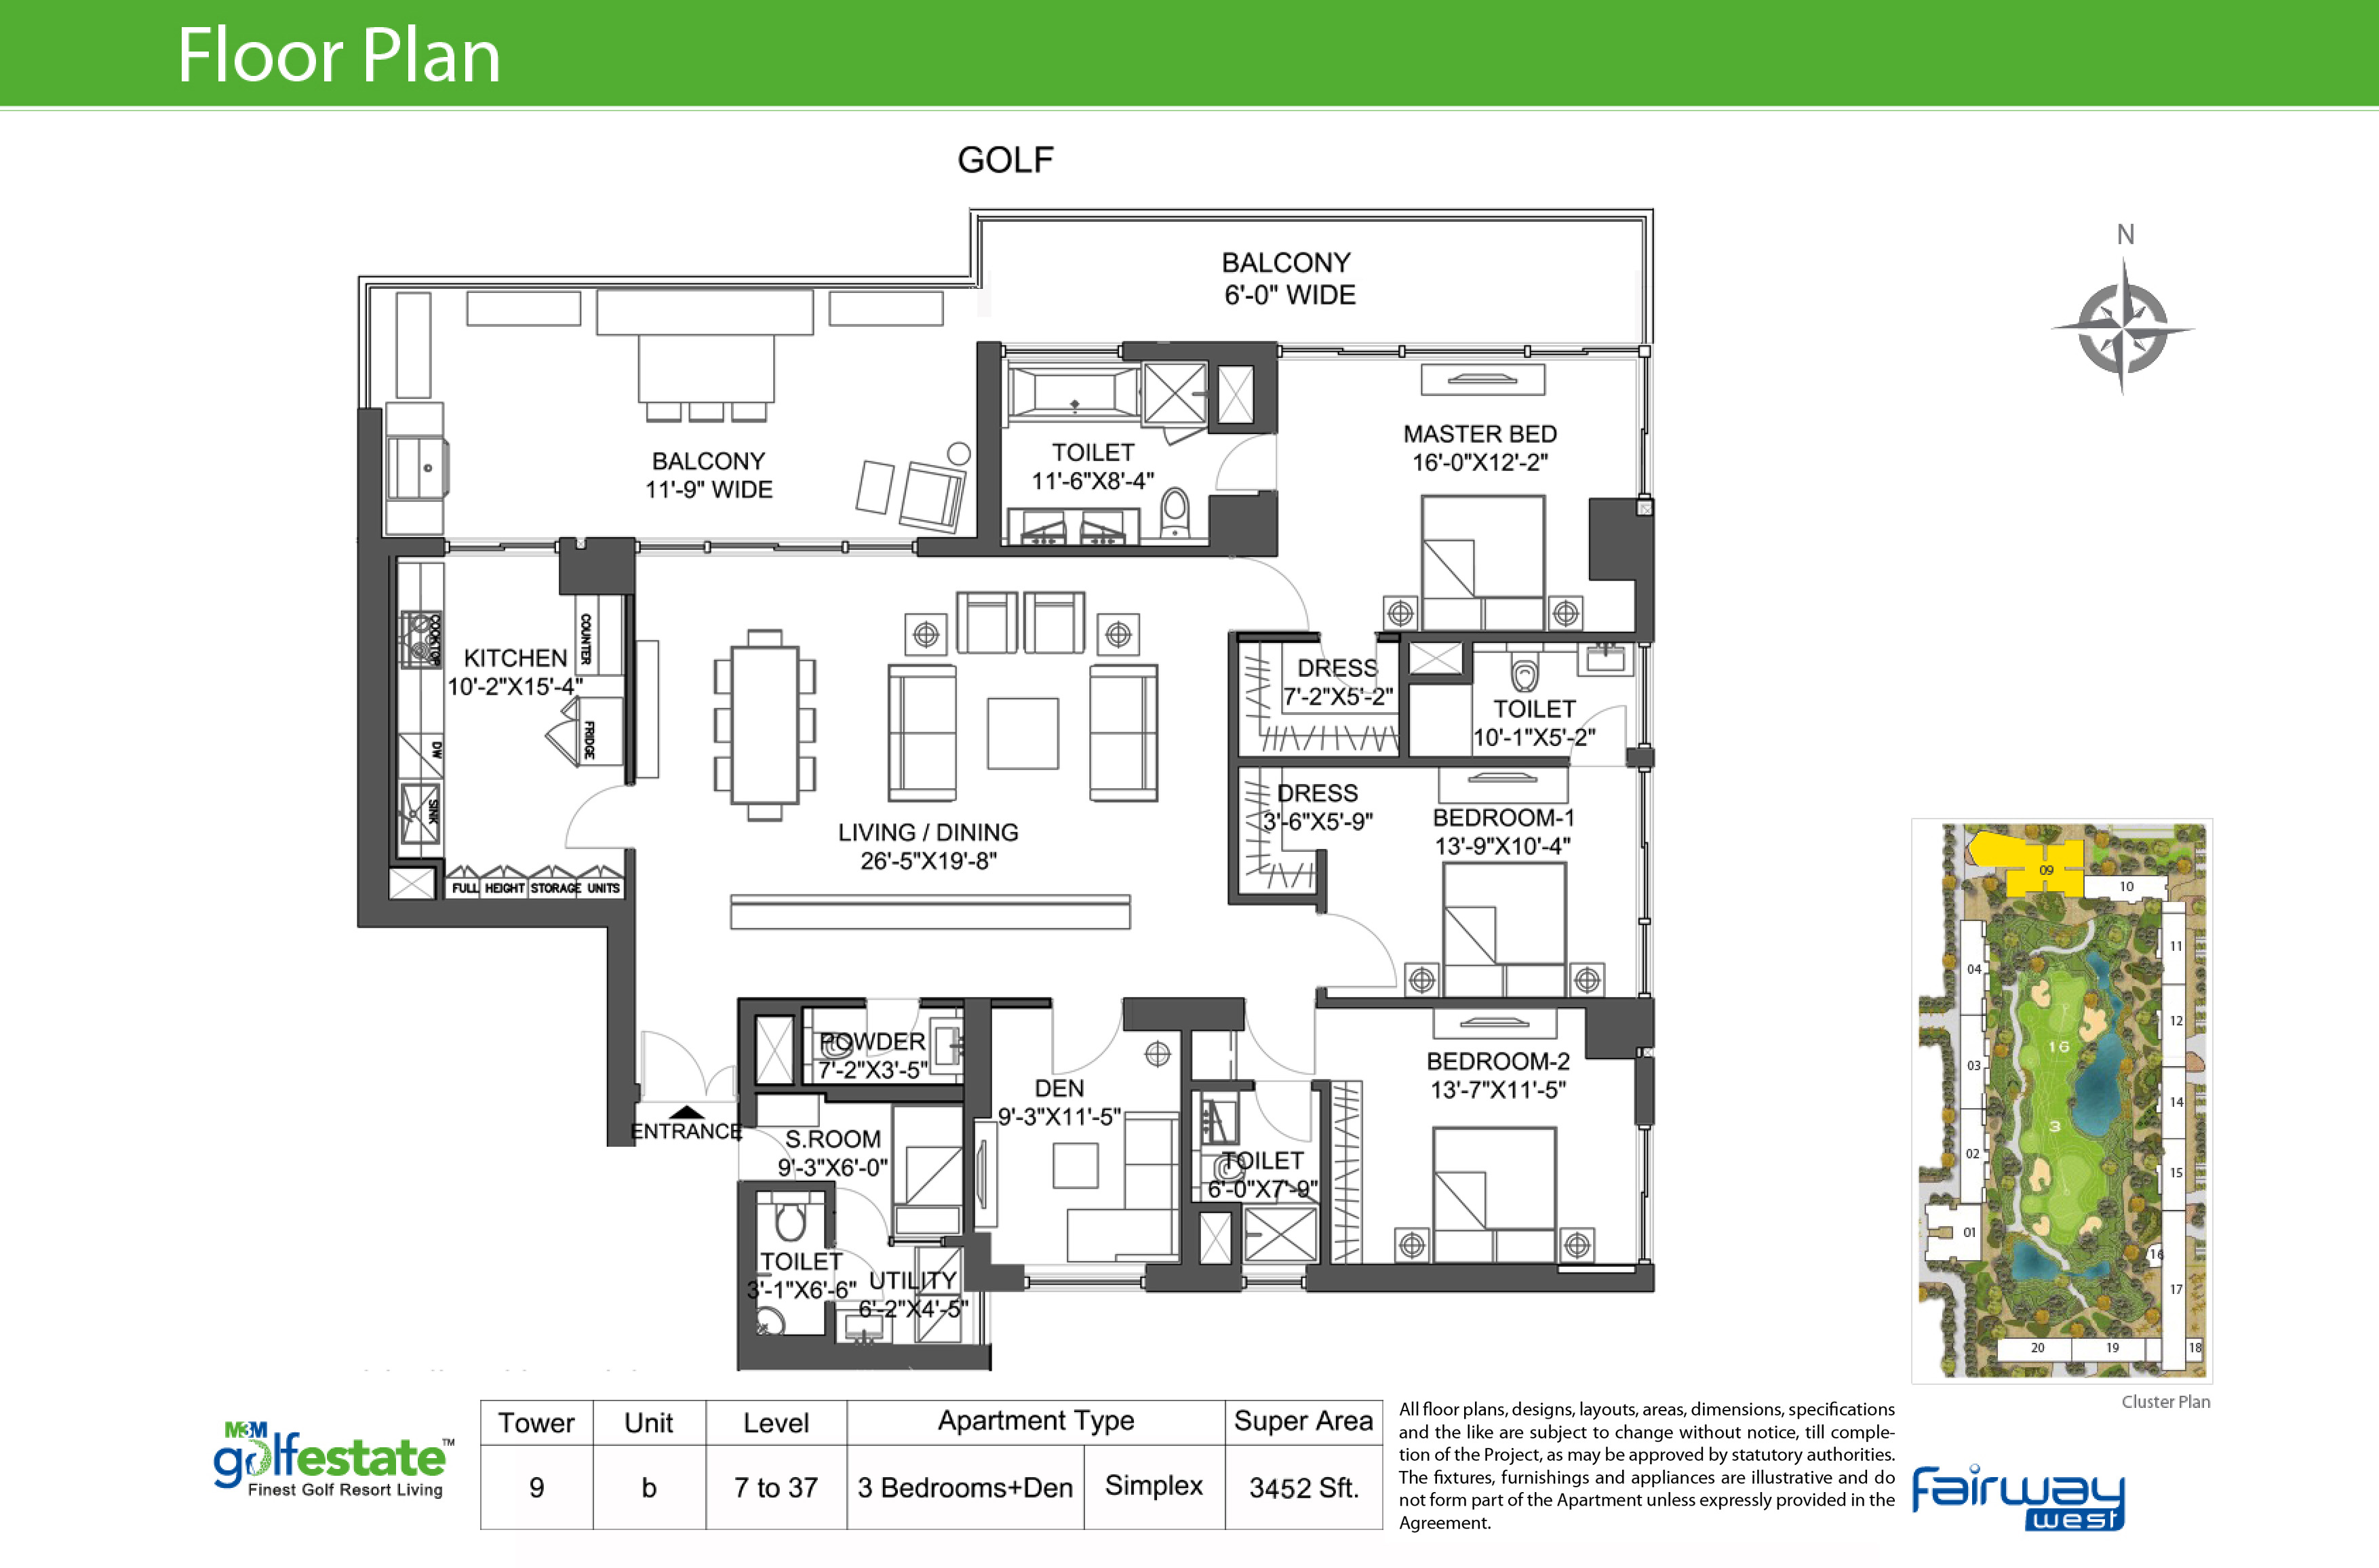 Floor plan of M3M Golf estate Fairway West 3452 Sqft